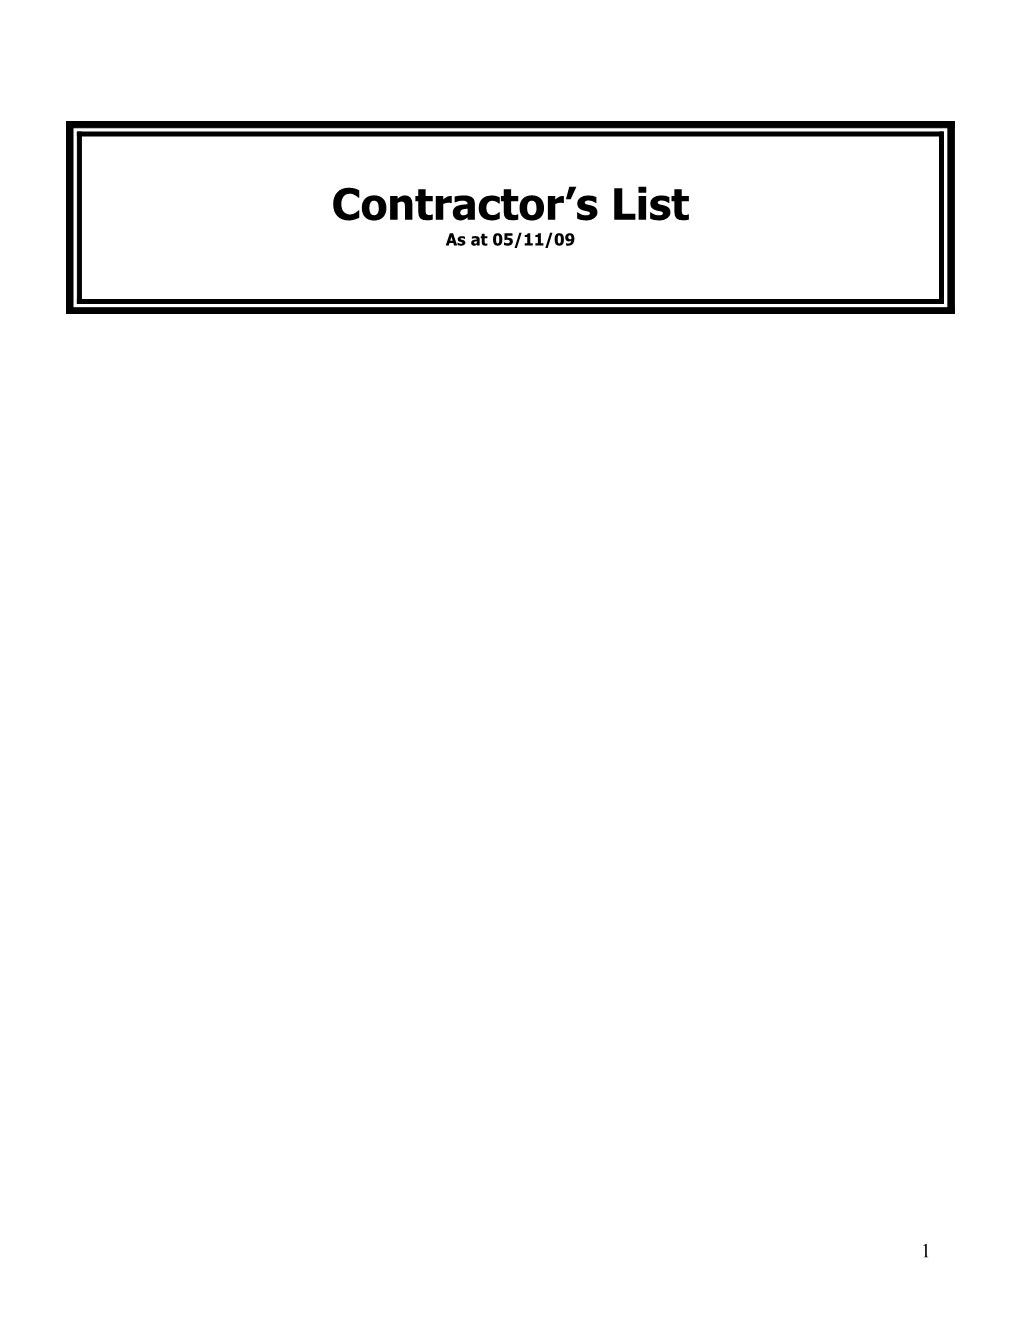 CONTRACTORS LIST As at October 1998